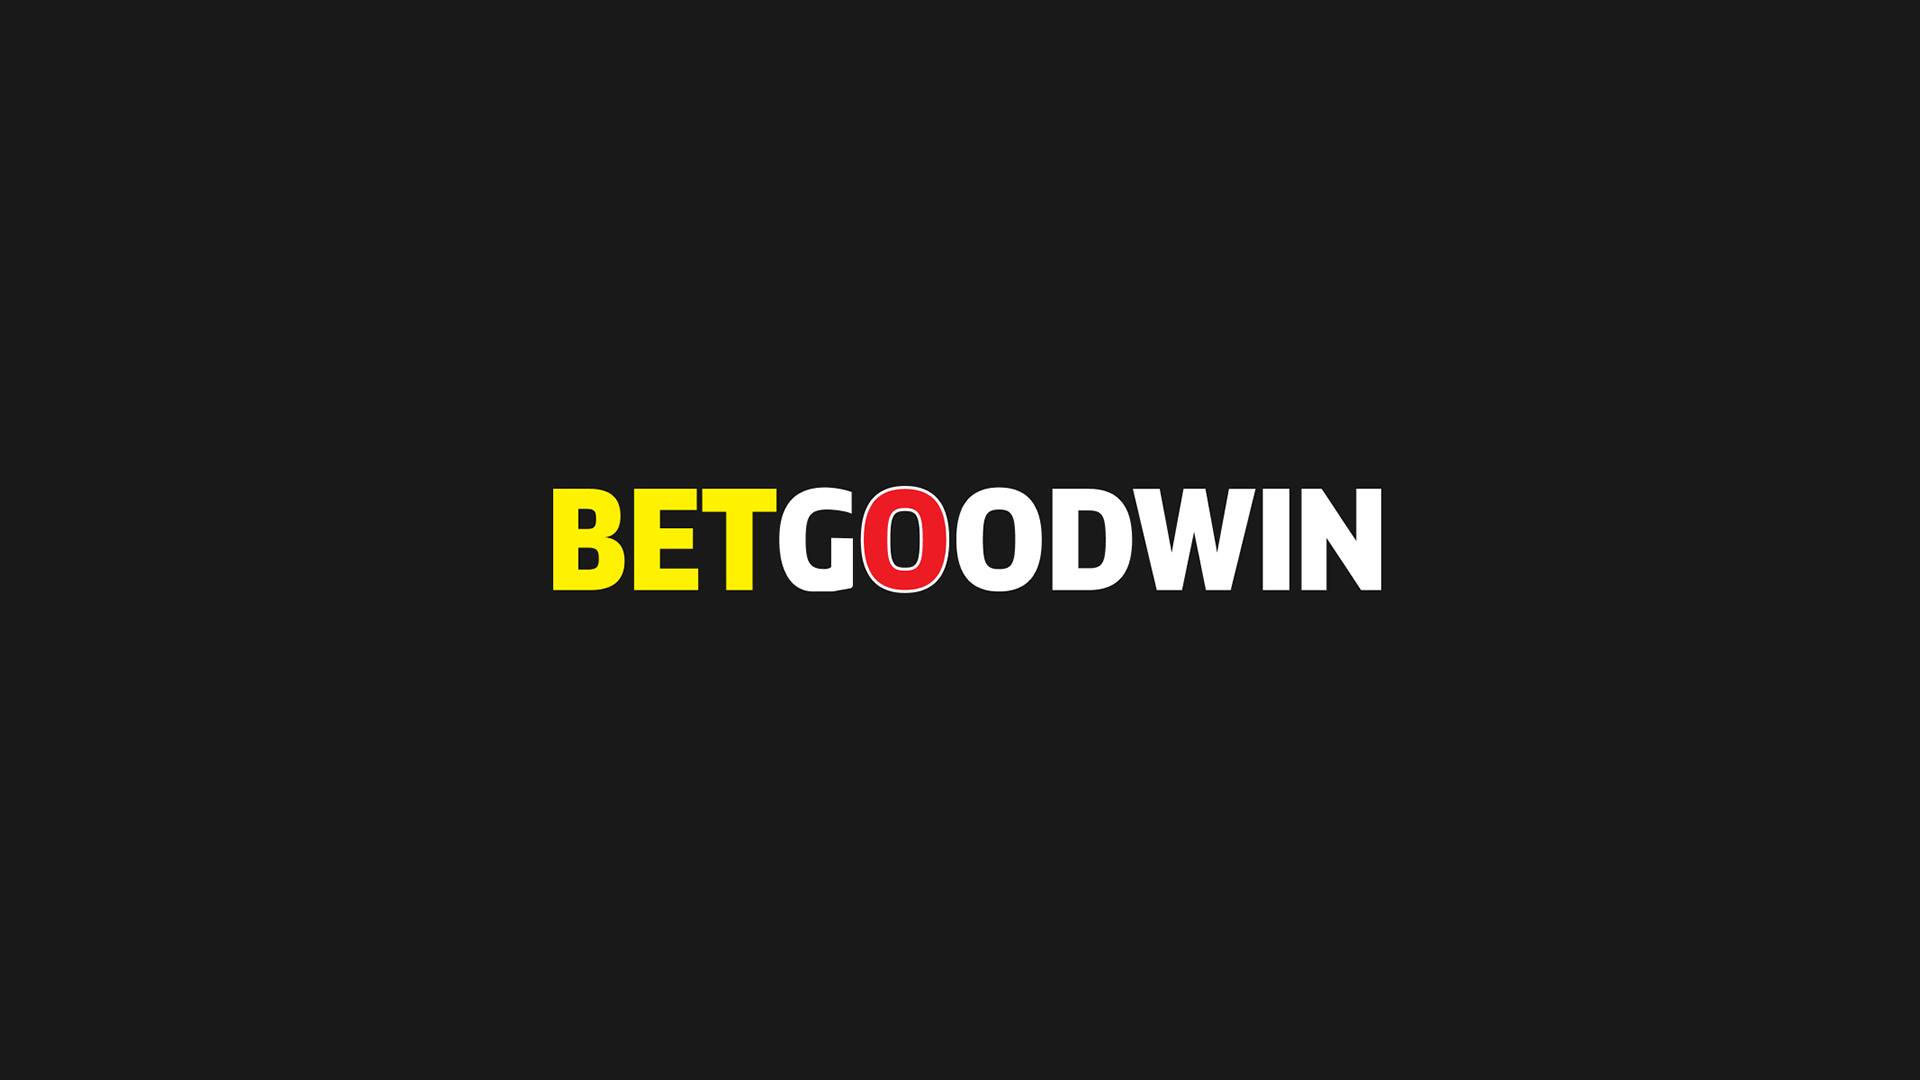 Betgoodwin logo